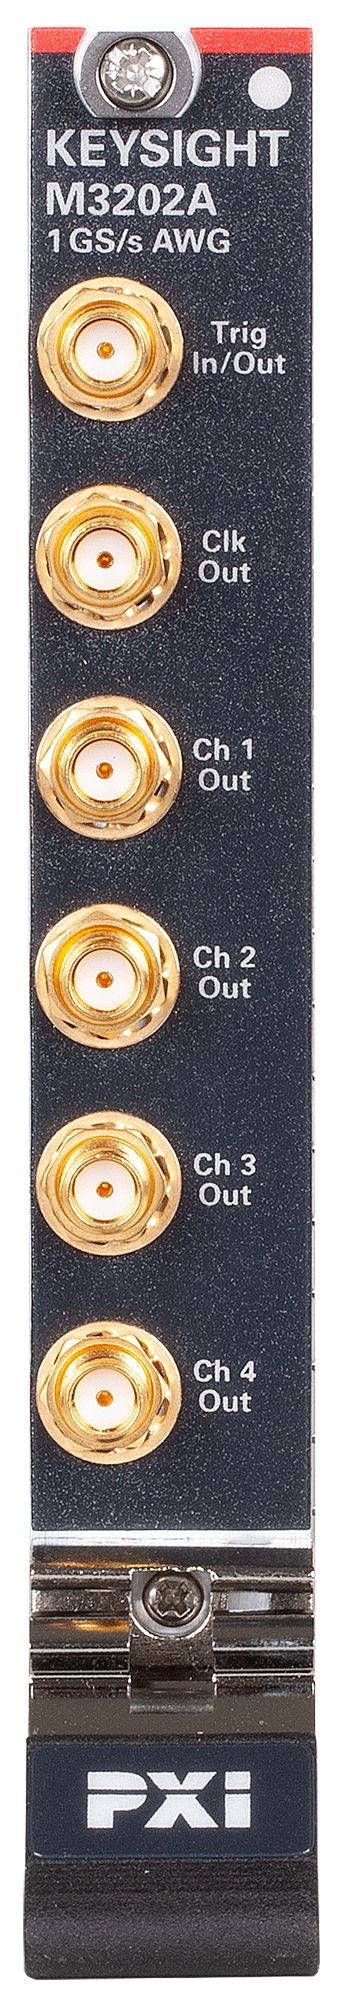 Keysight M3202A-CH4 4 Channels